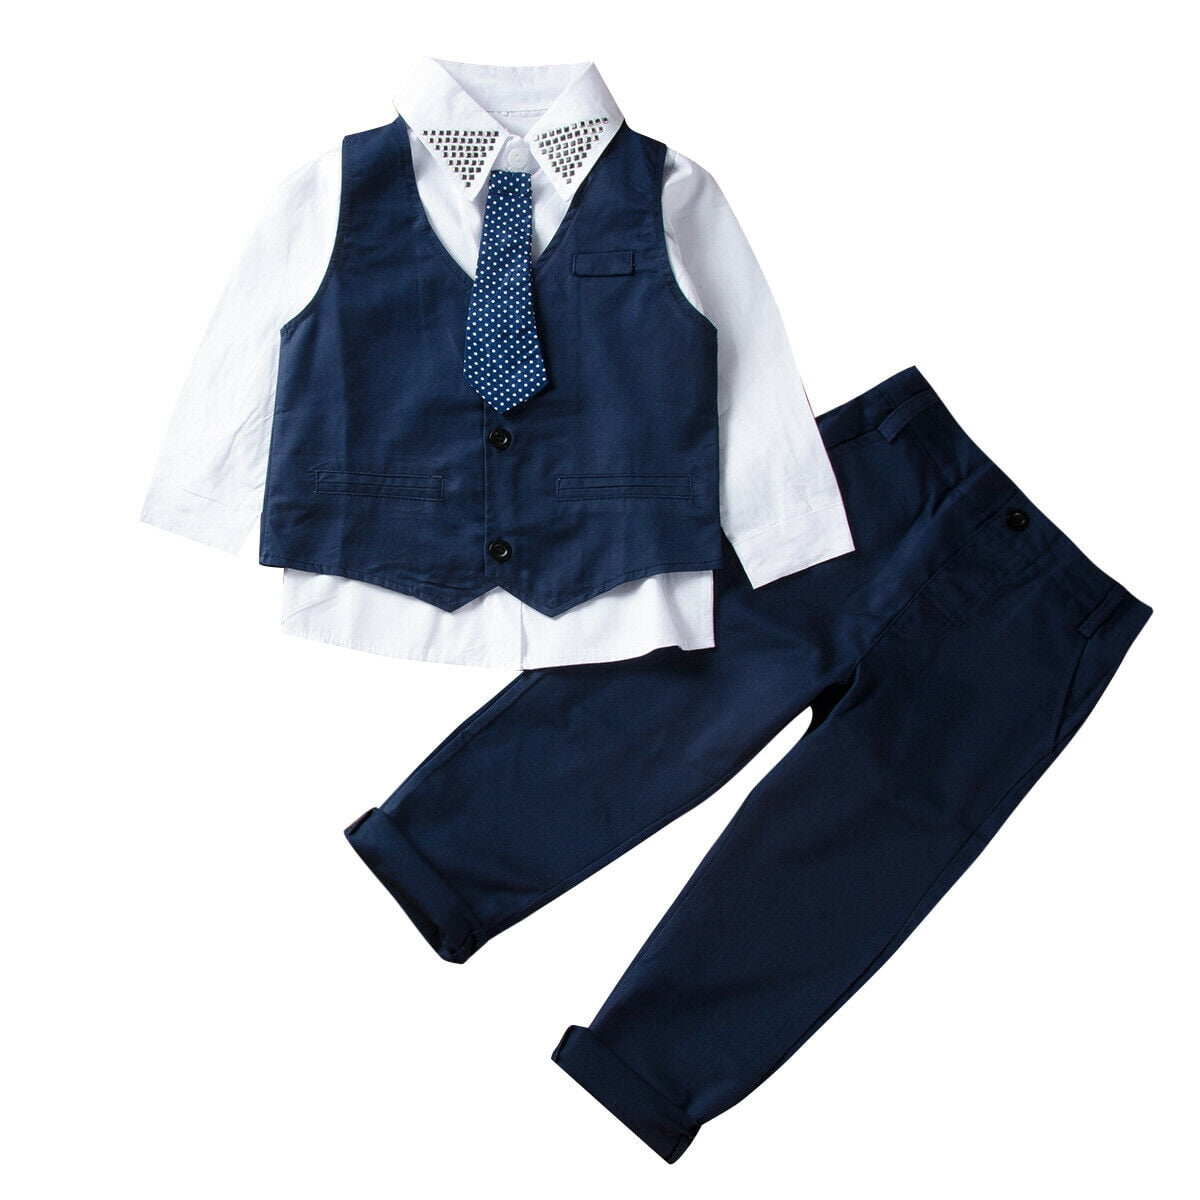 4PCS Toddler Kid Baby Boy Gentleman Suit Long Sleeve Shirt Vest Tie Pants Outfit 